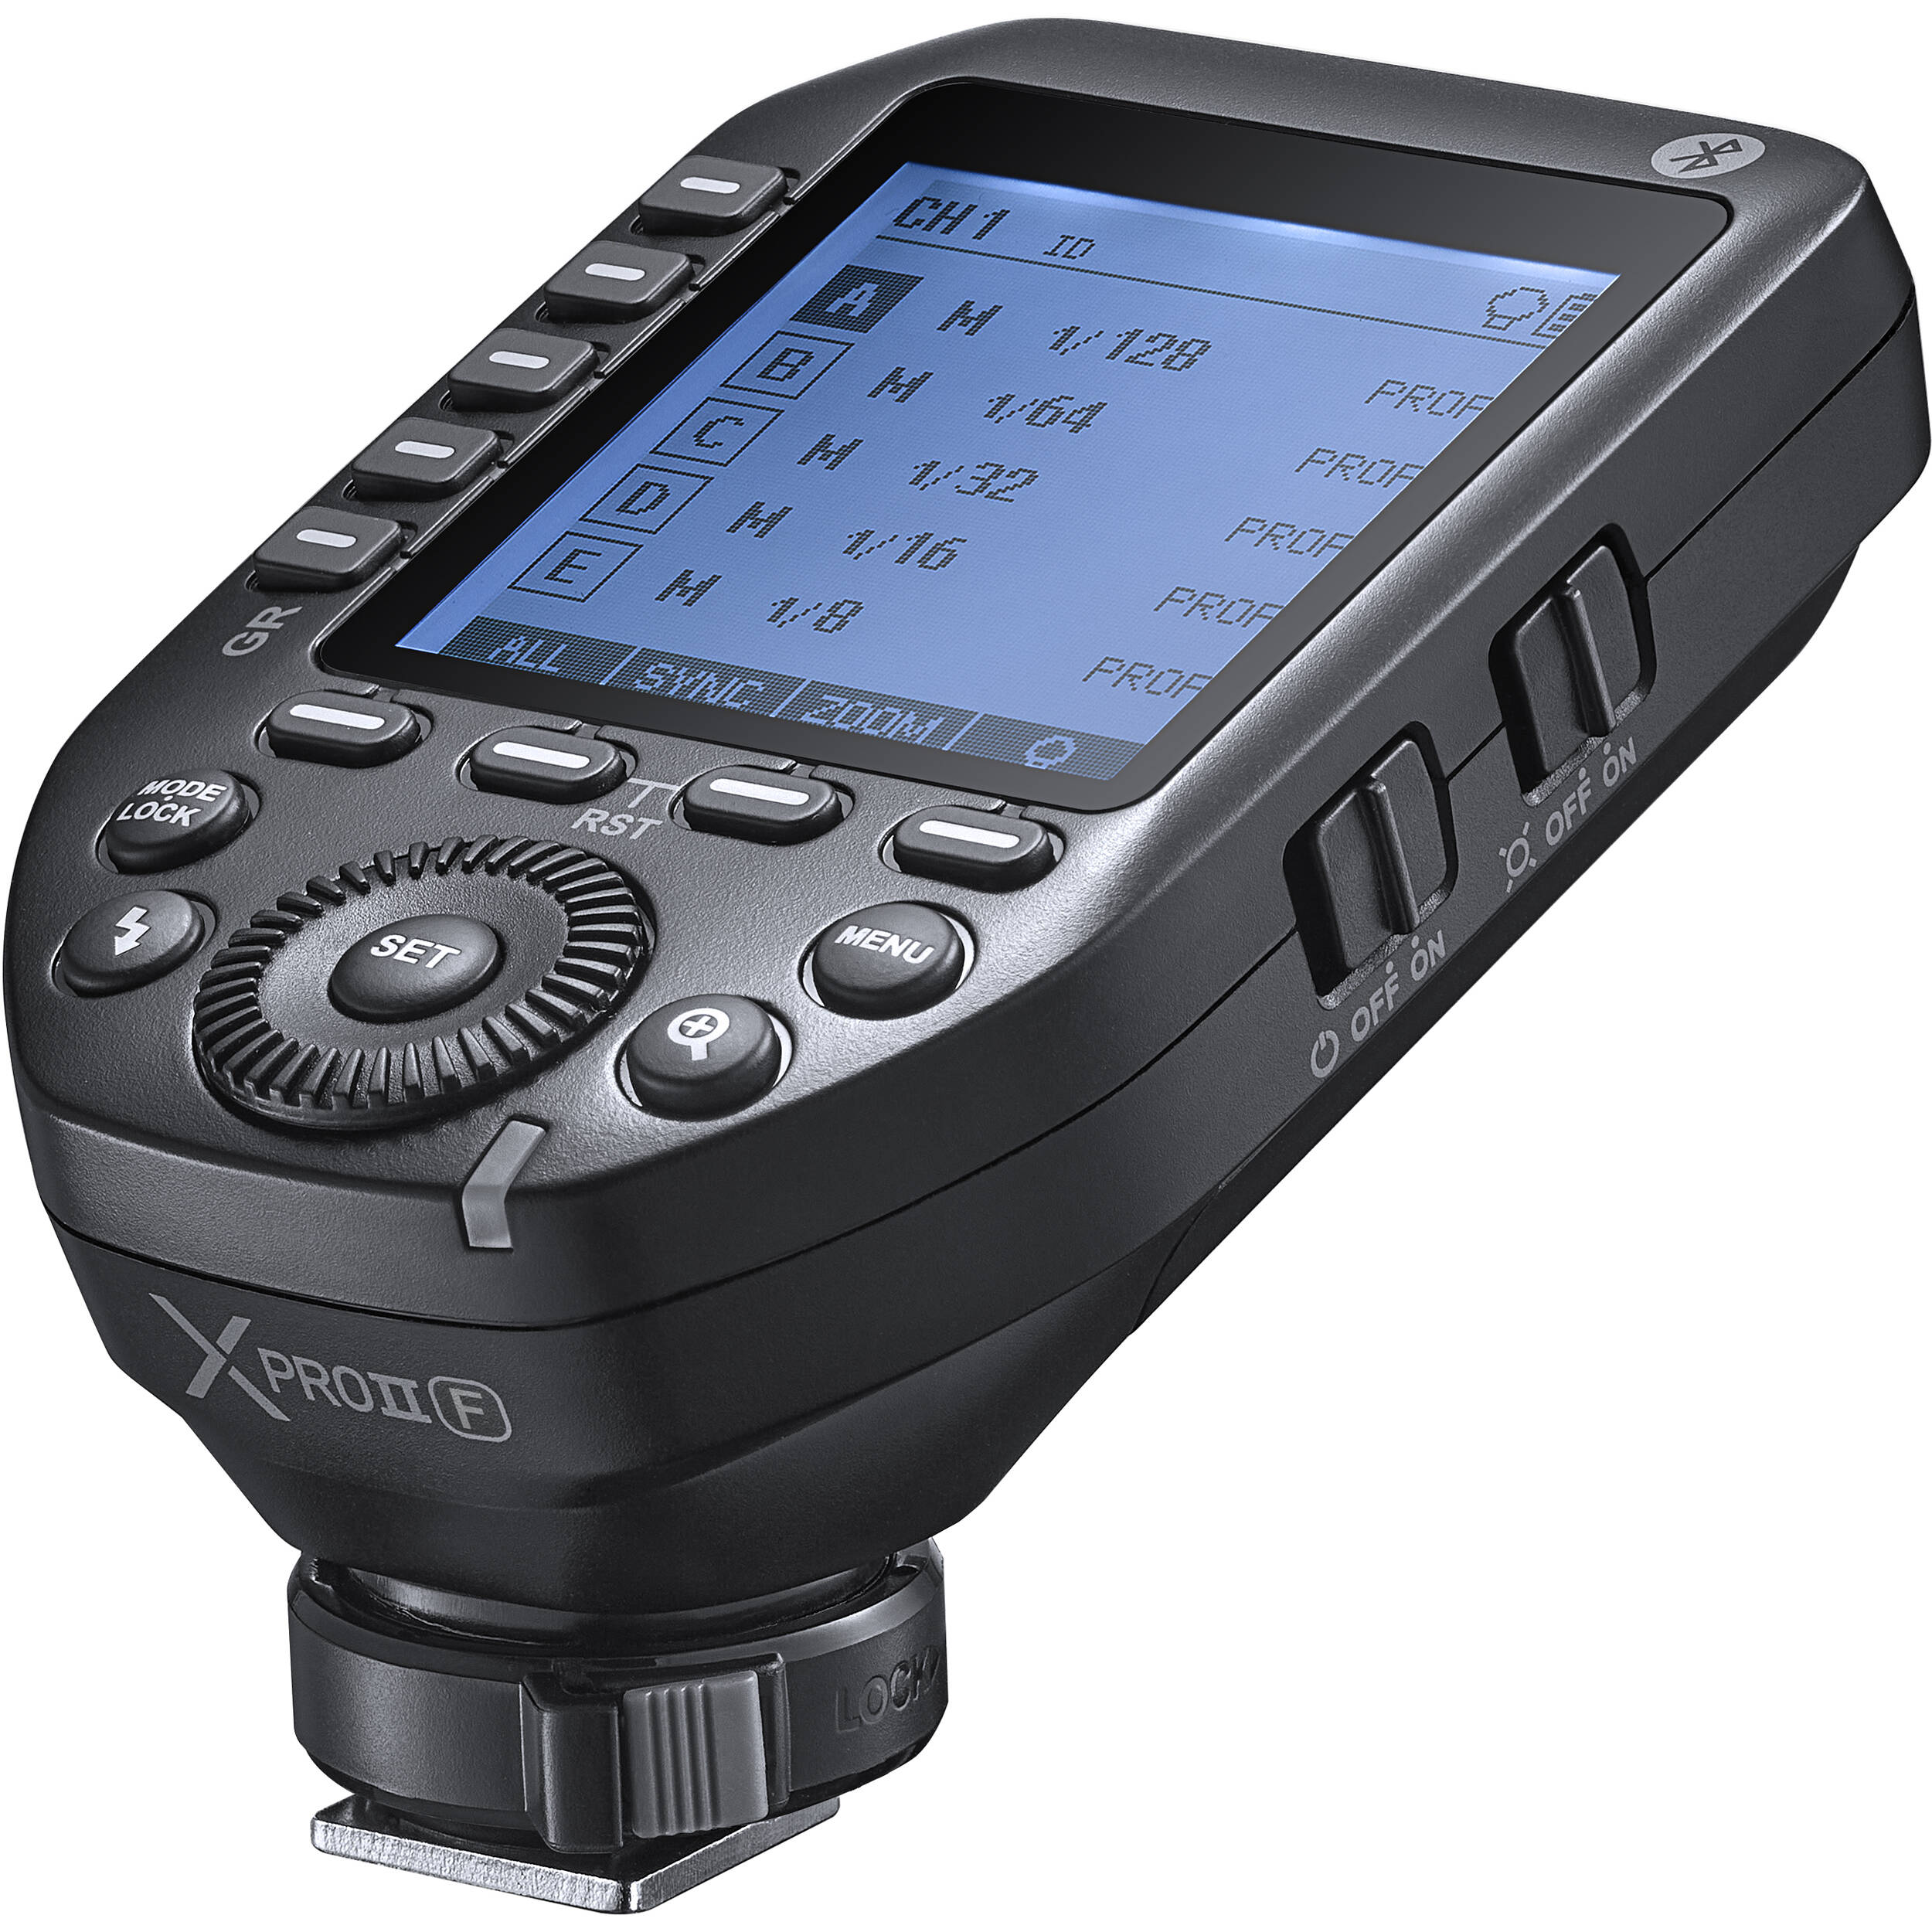 Godox XProII F TTL Wireless Flash Trigger for Fuji Cameras Godox Wireless Flash Transmitter/Receiver